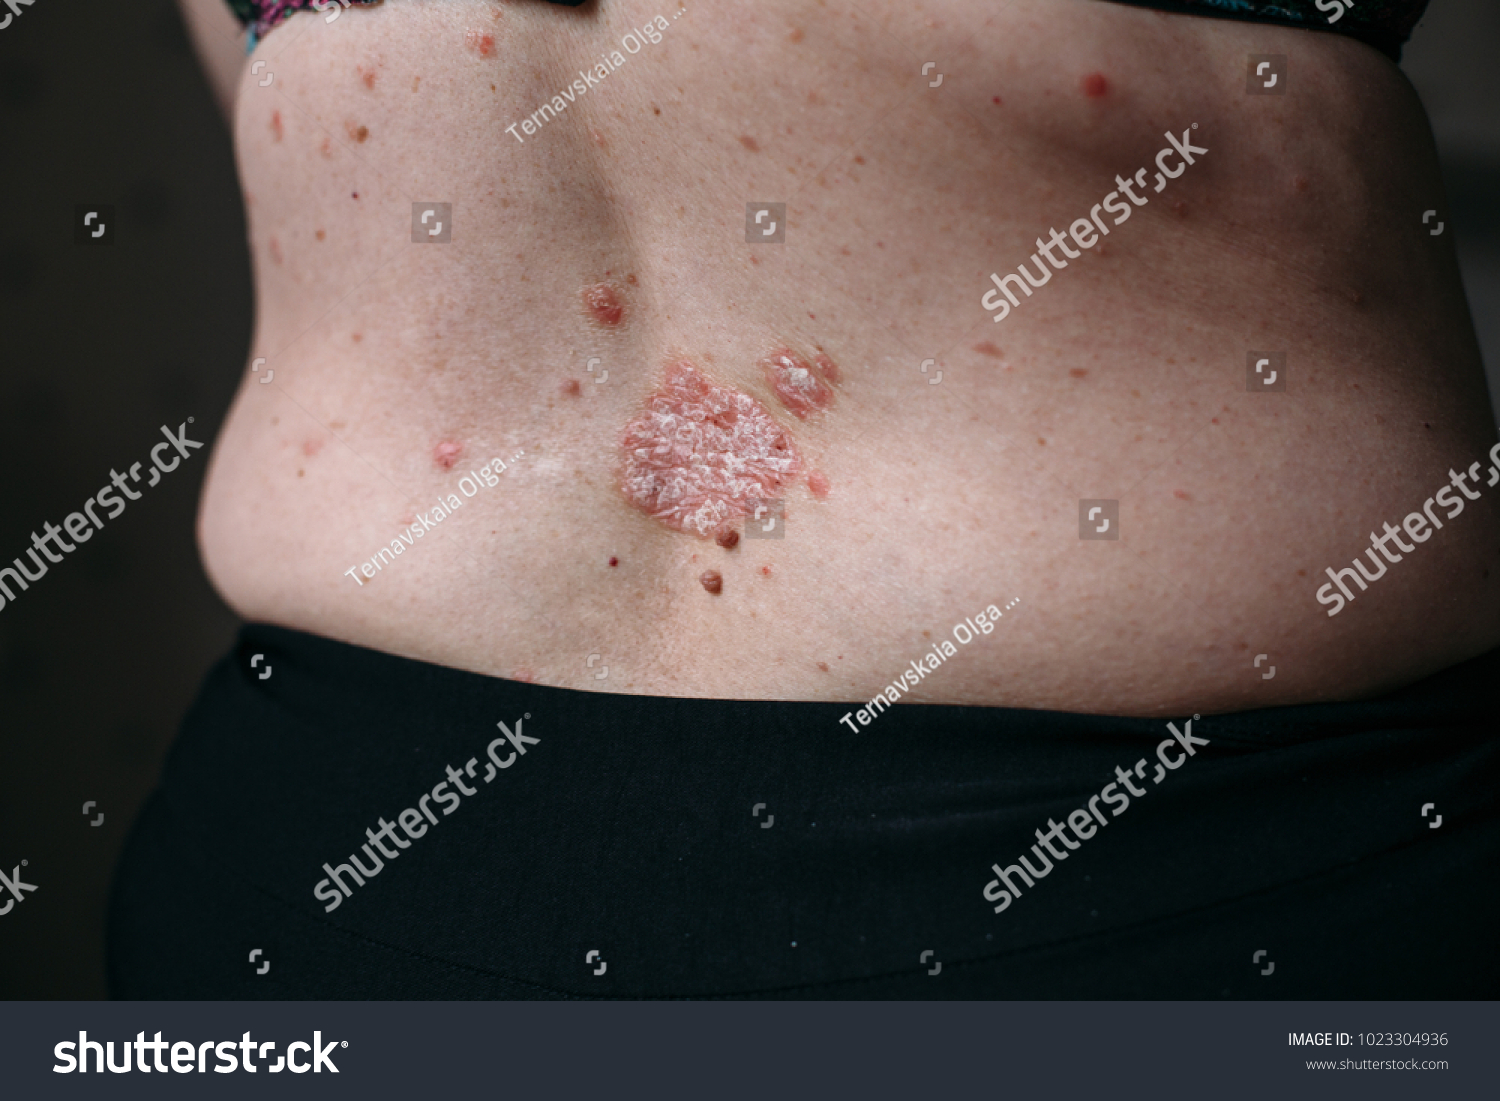 Eczema Atopic Dermatitis Symptom Skin Texture Stock Photo 1023304936